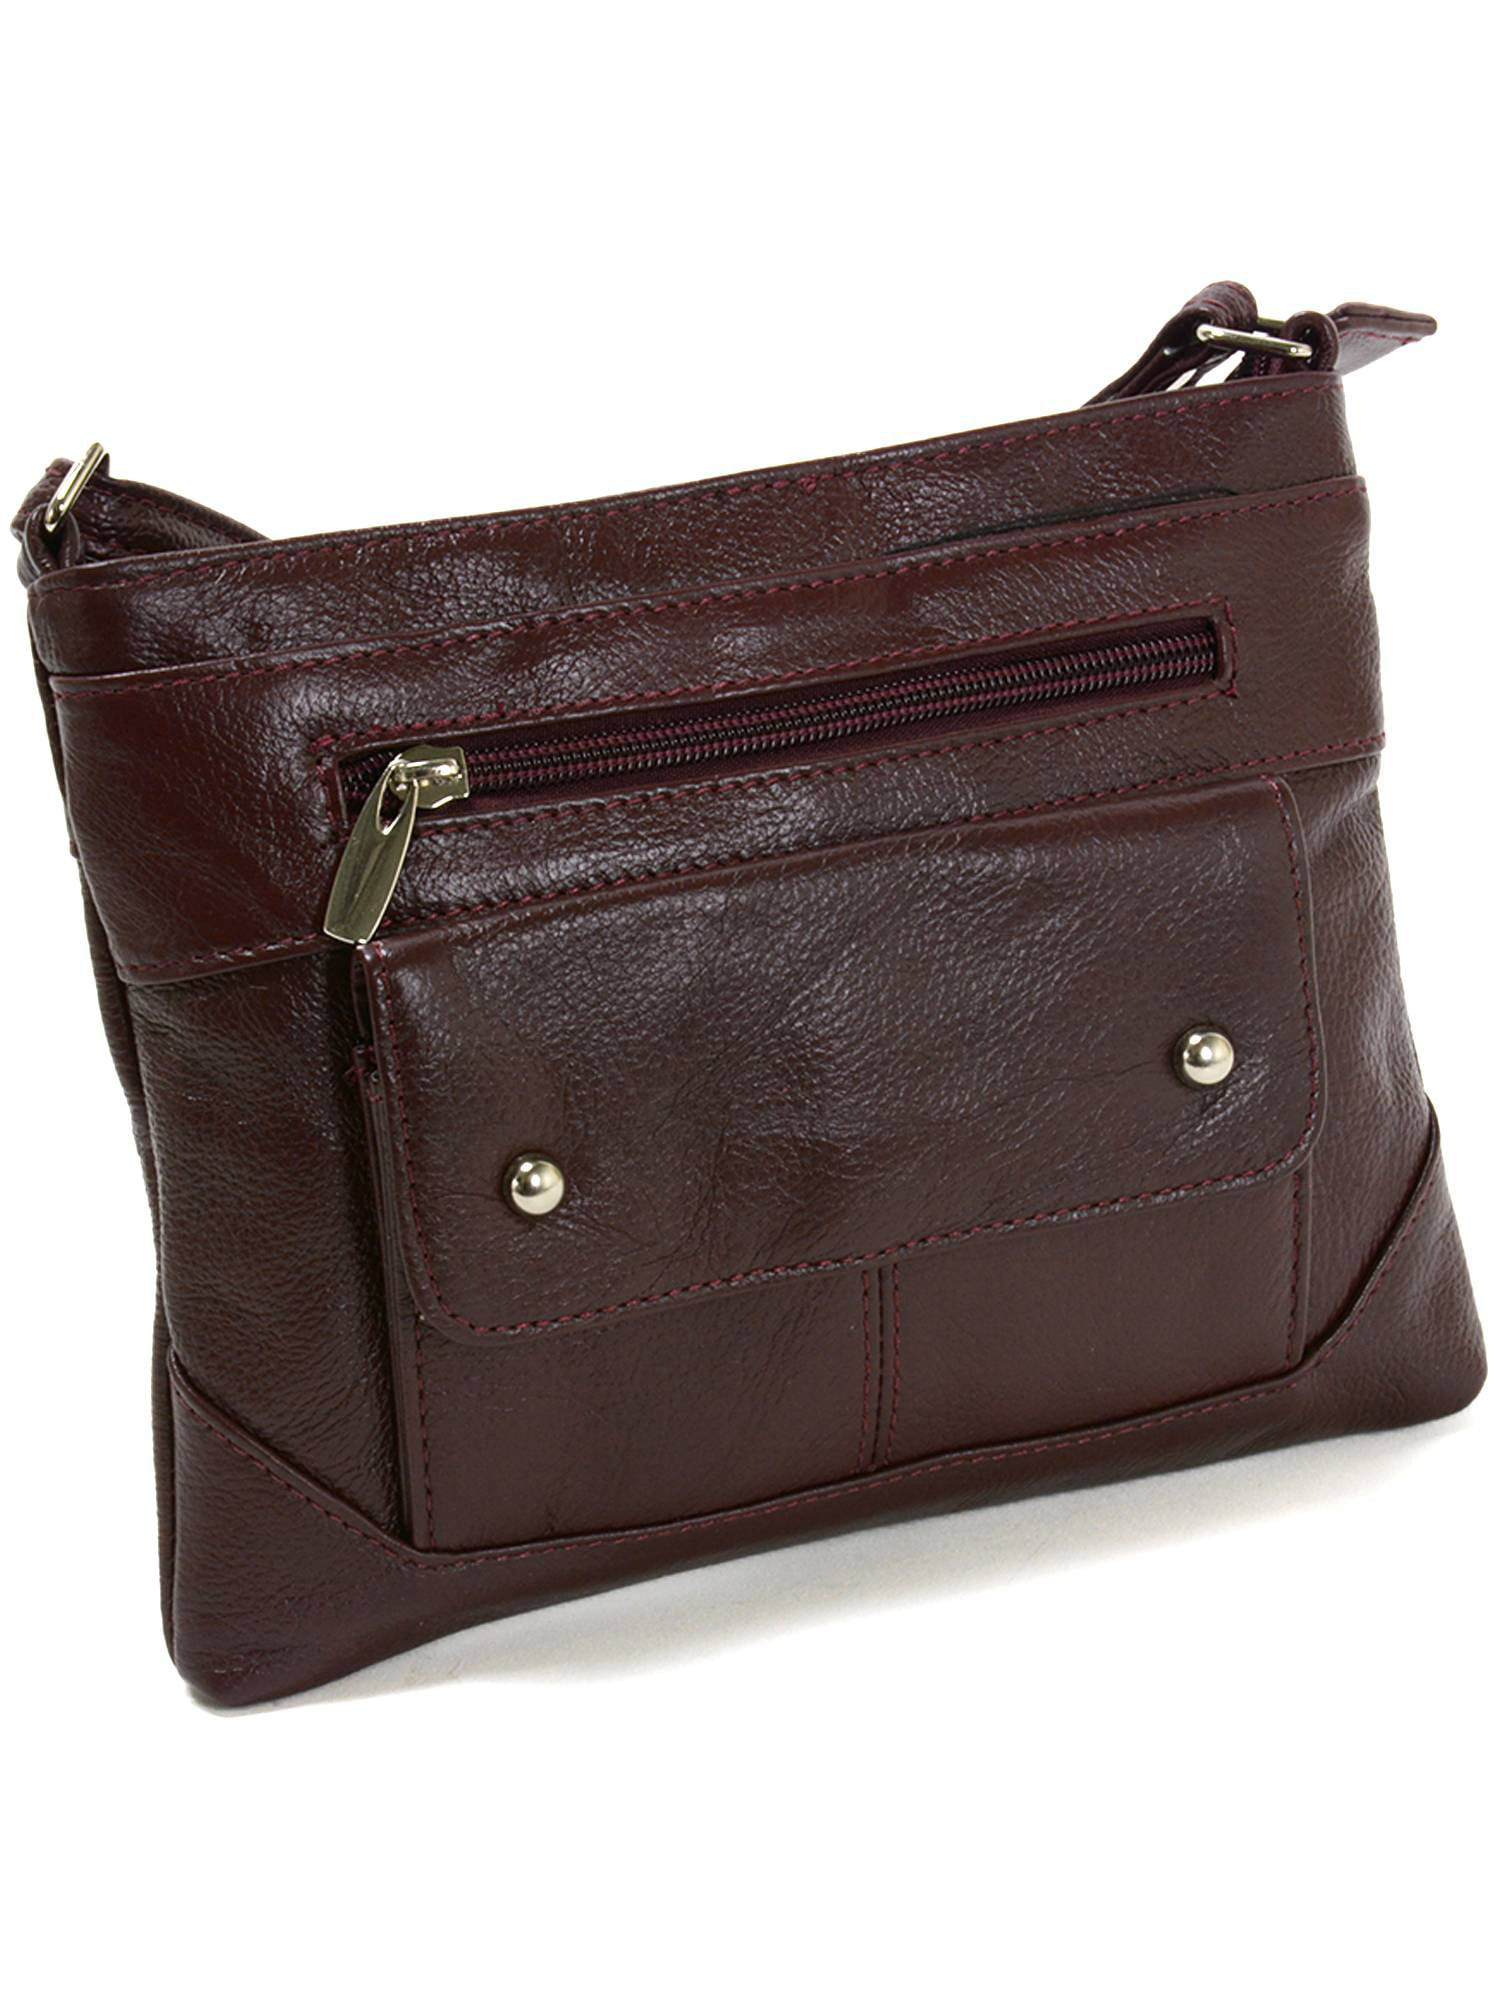 New Leather Genuine Purse Handbag Shoulder Body Women Cross Messenger Bag 